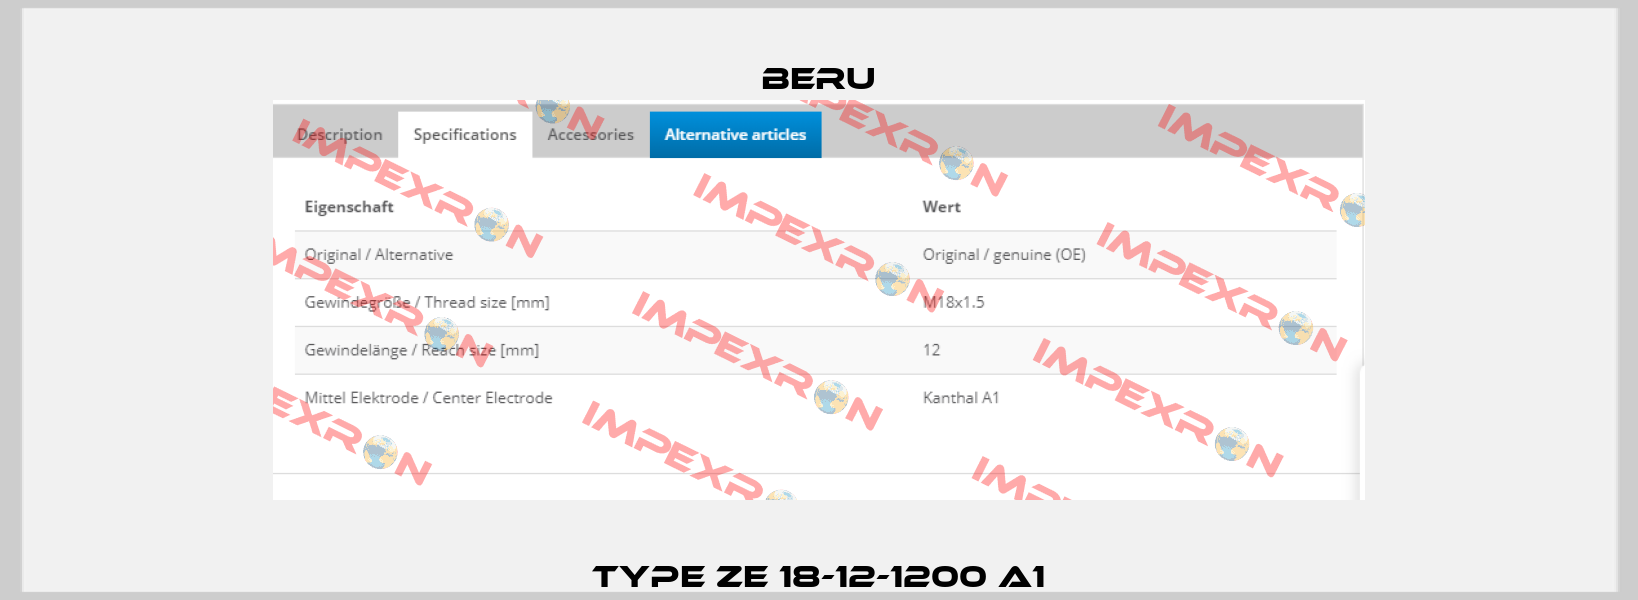 Type ZE 18-12-1200 A1 Beru